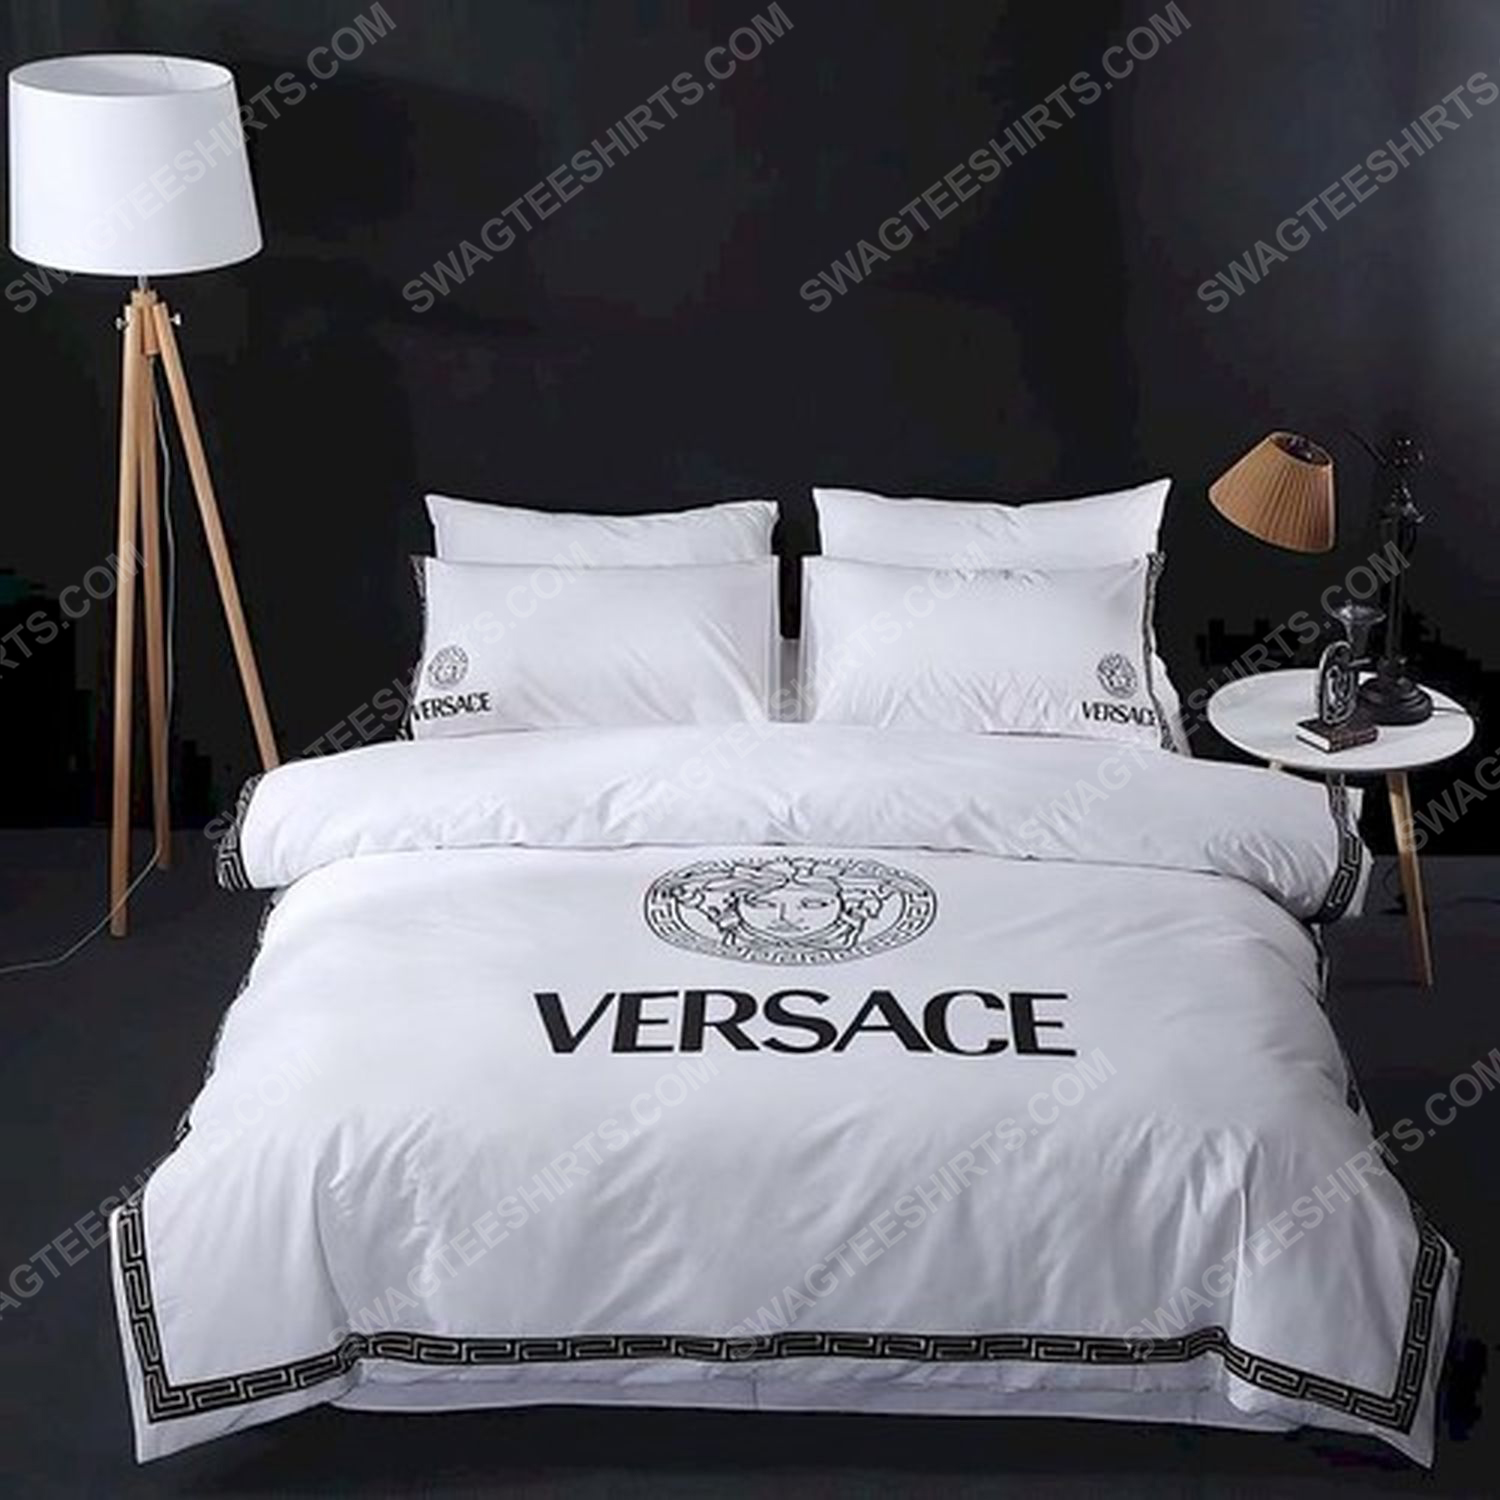 Versace home original full print duvet cover bedding set 1